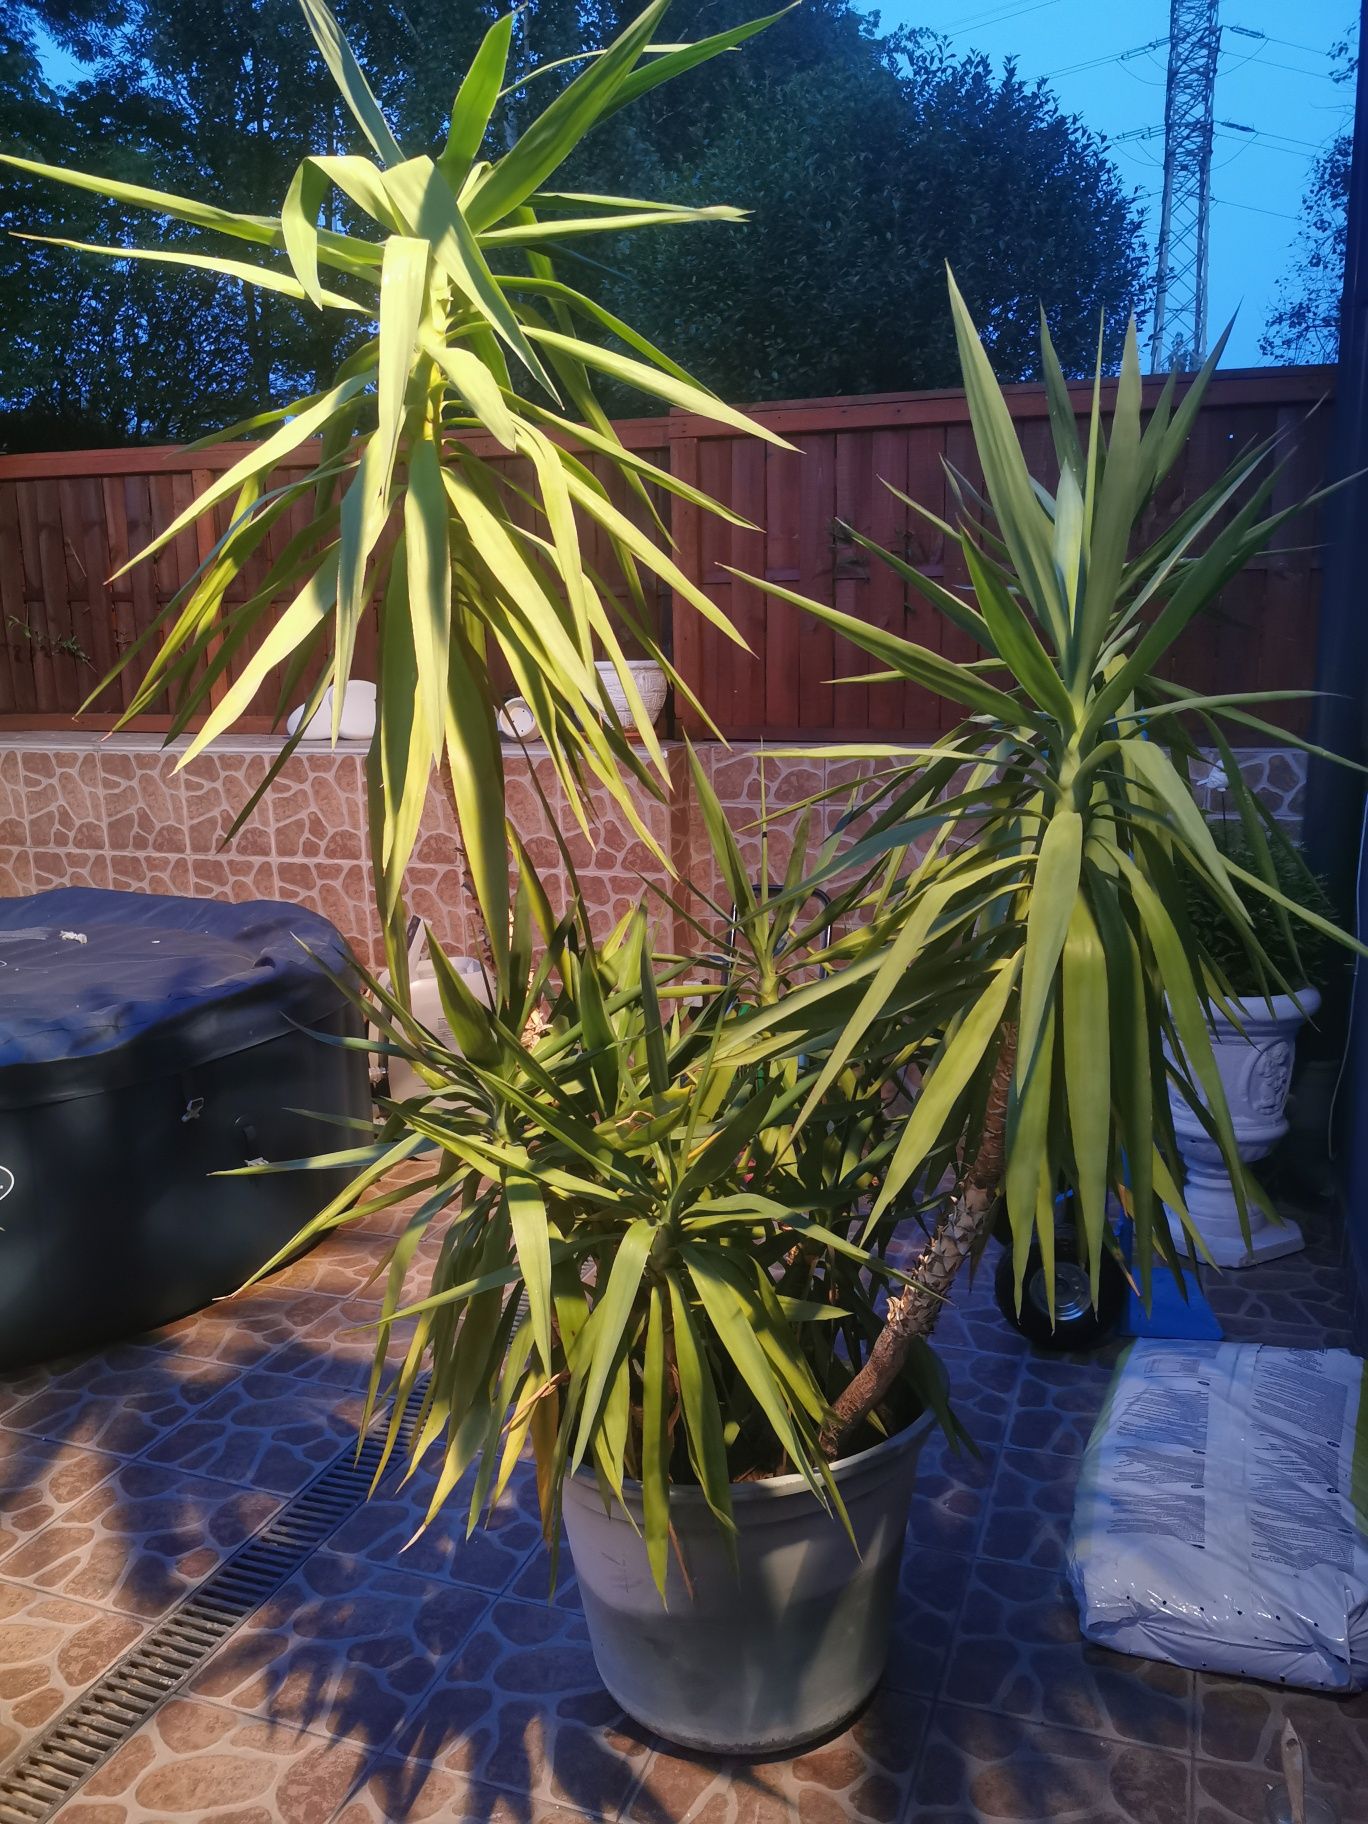 Yukka/ogromna palma/do domu bądź ogrodu